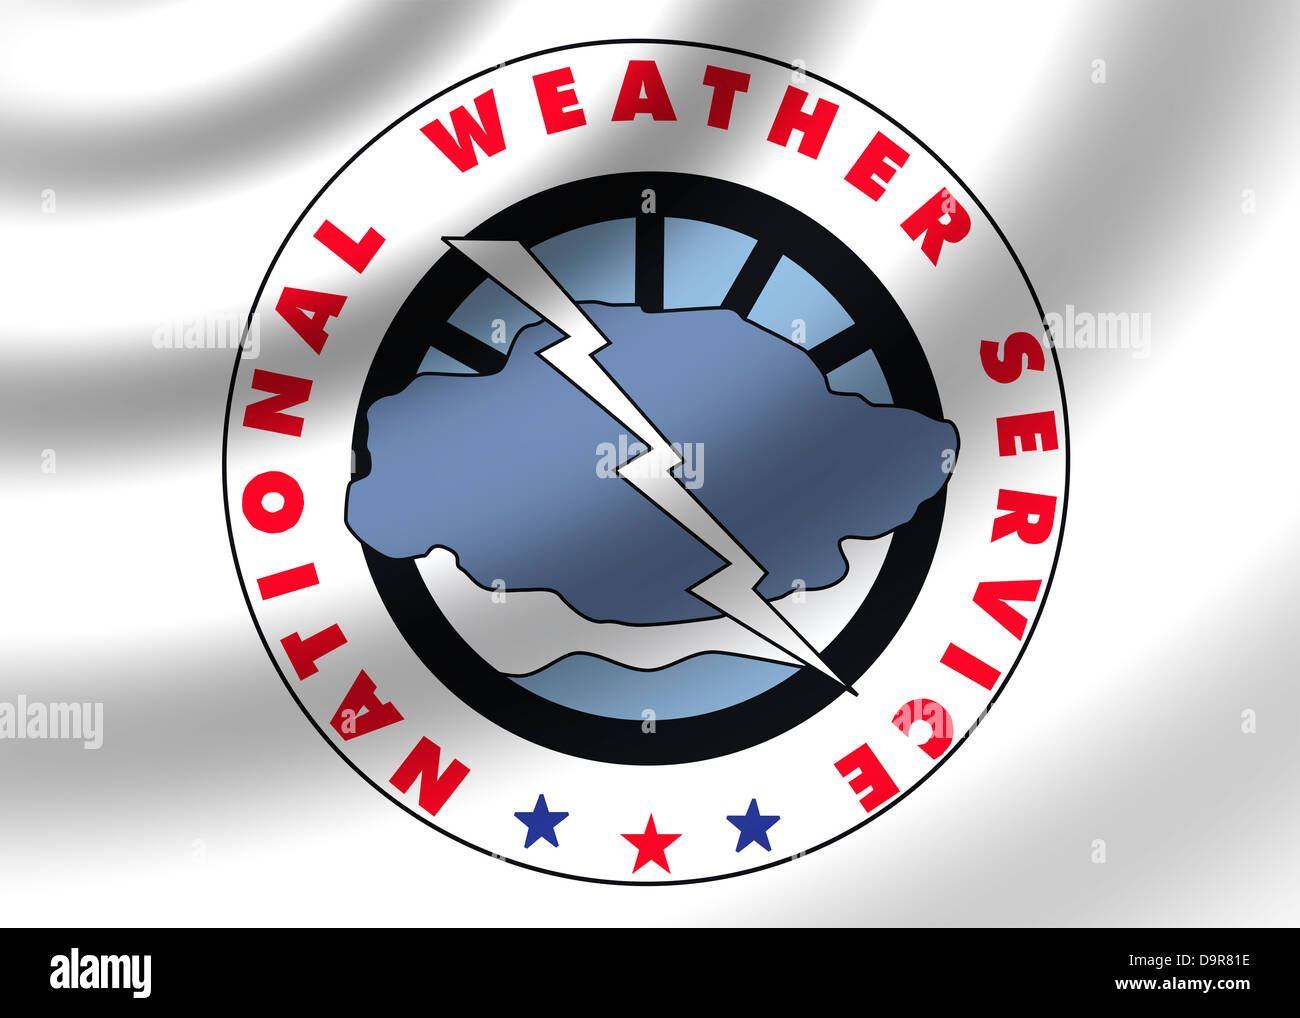 National Weather Service logo symbol icon flag Stock Photo